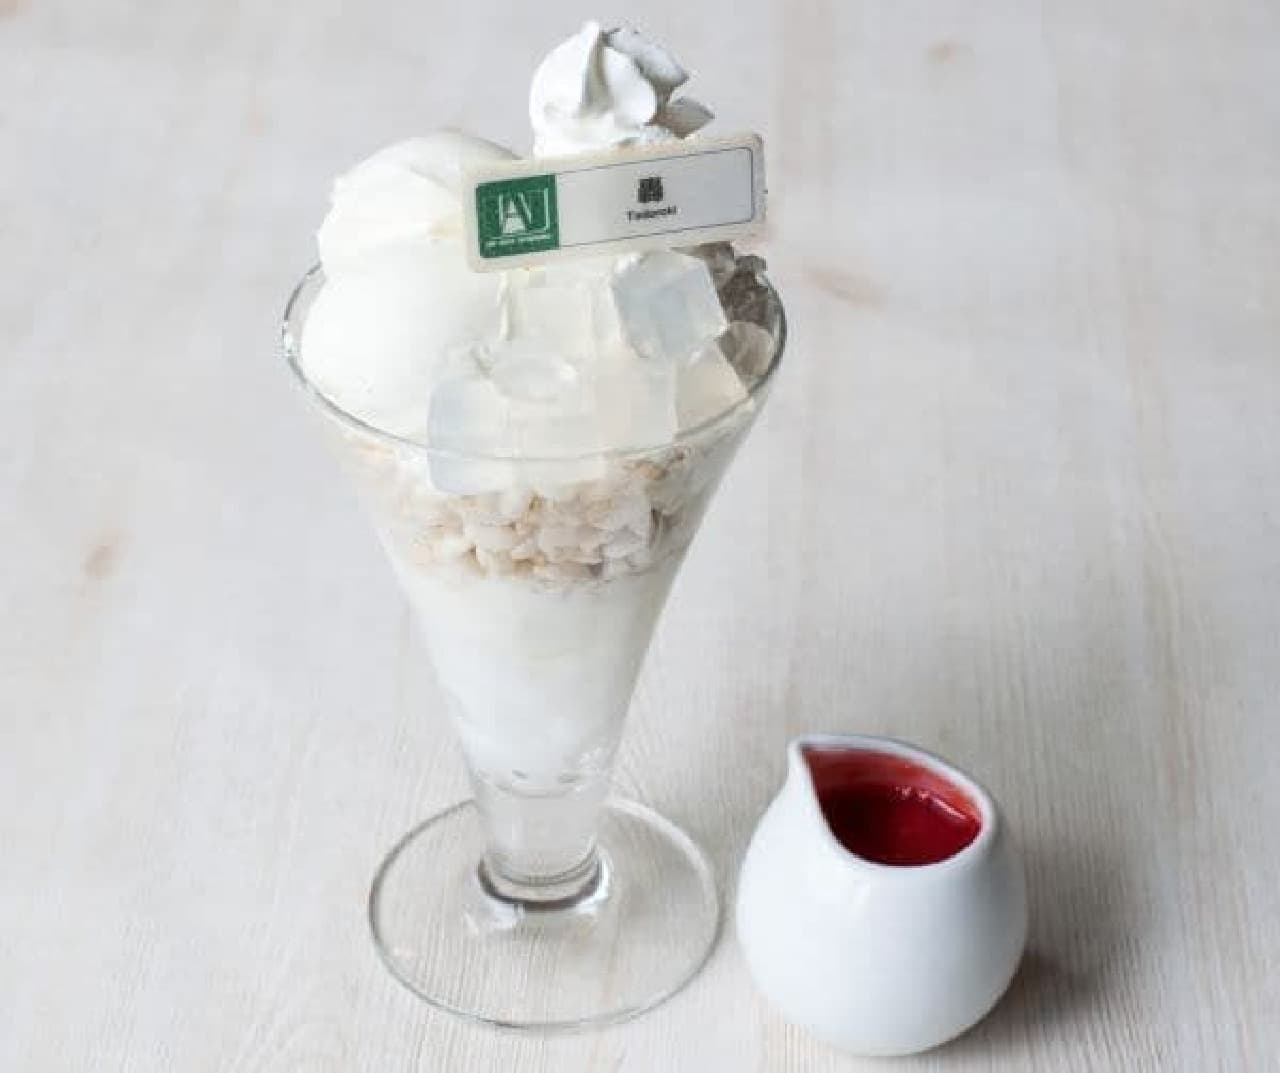 Original menu offered at Hands Cafe "Shoto Todoroki White Parfait with Strawberry Sauce"